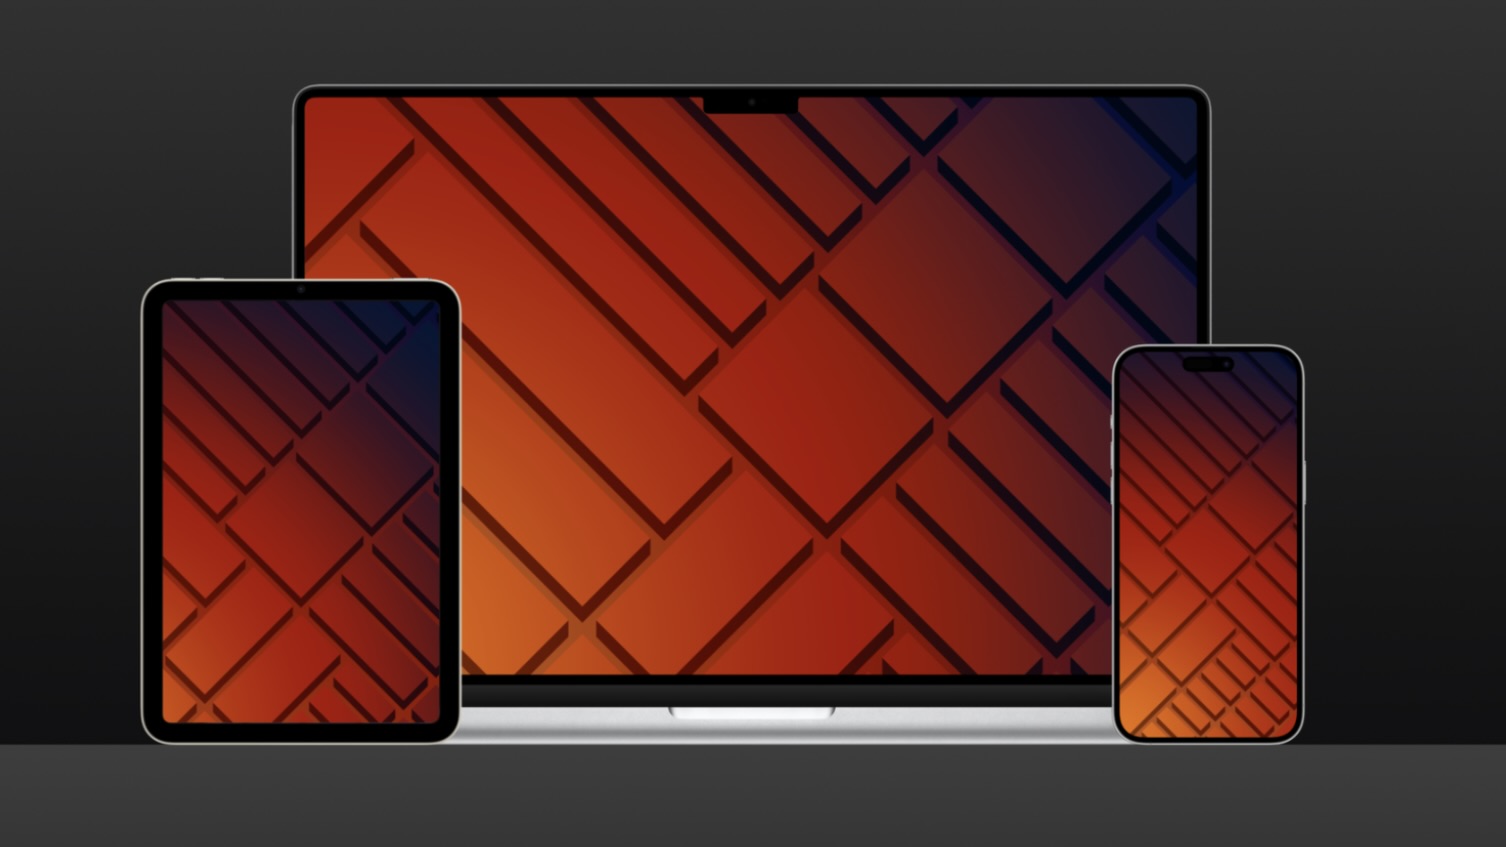 Minimal M2 wallpapers iPhone, iPad, Mac